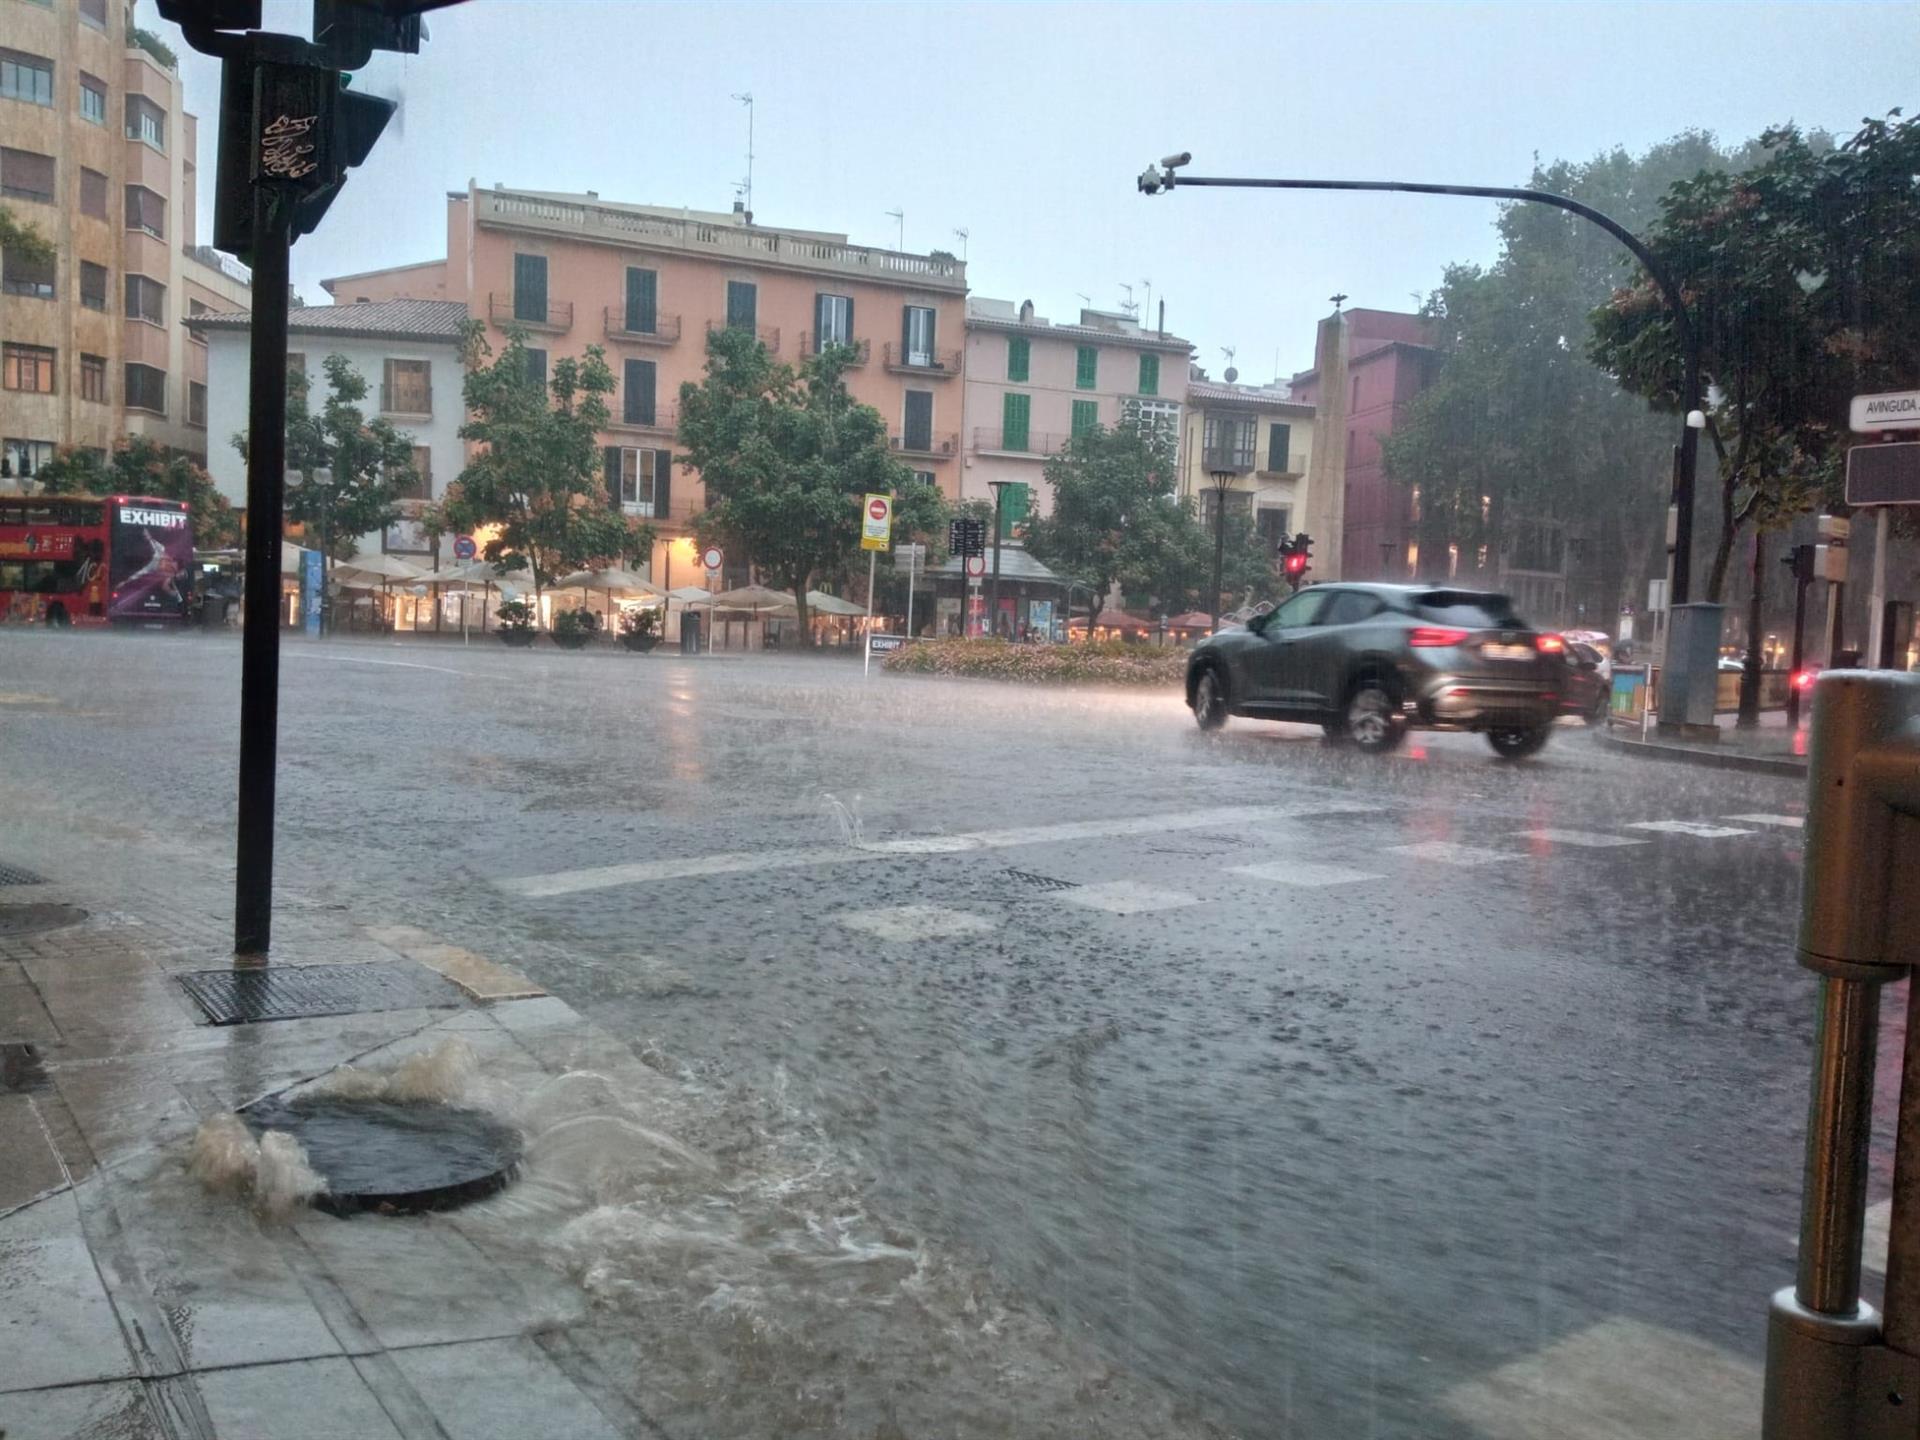 Vista de la plaza Juan Carlos I de Palma (Mallorca) durante un día de lluvia. - EUROPA PRESS - Archivo